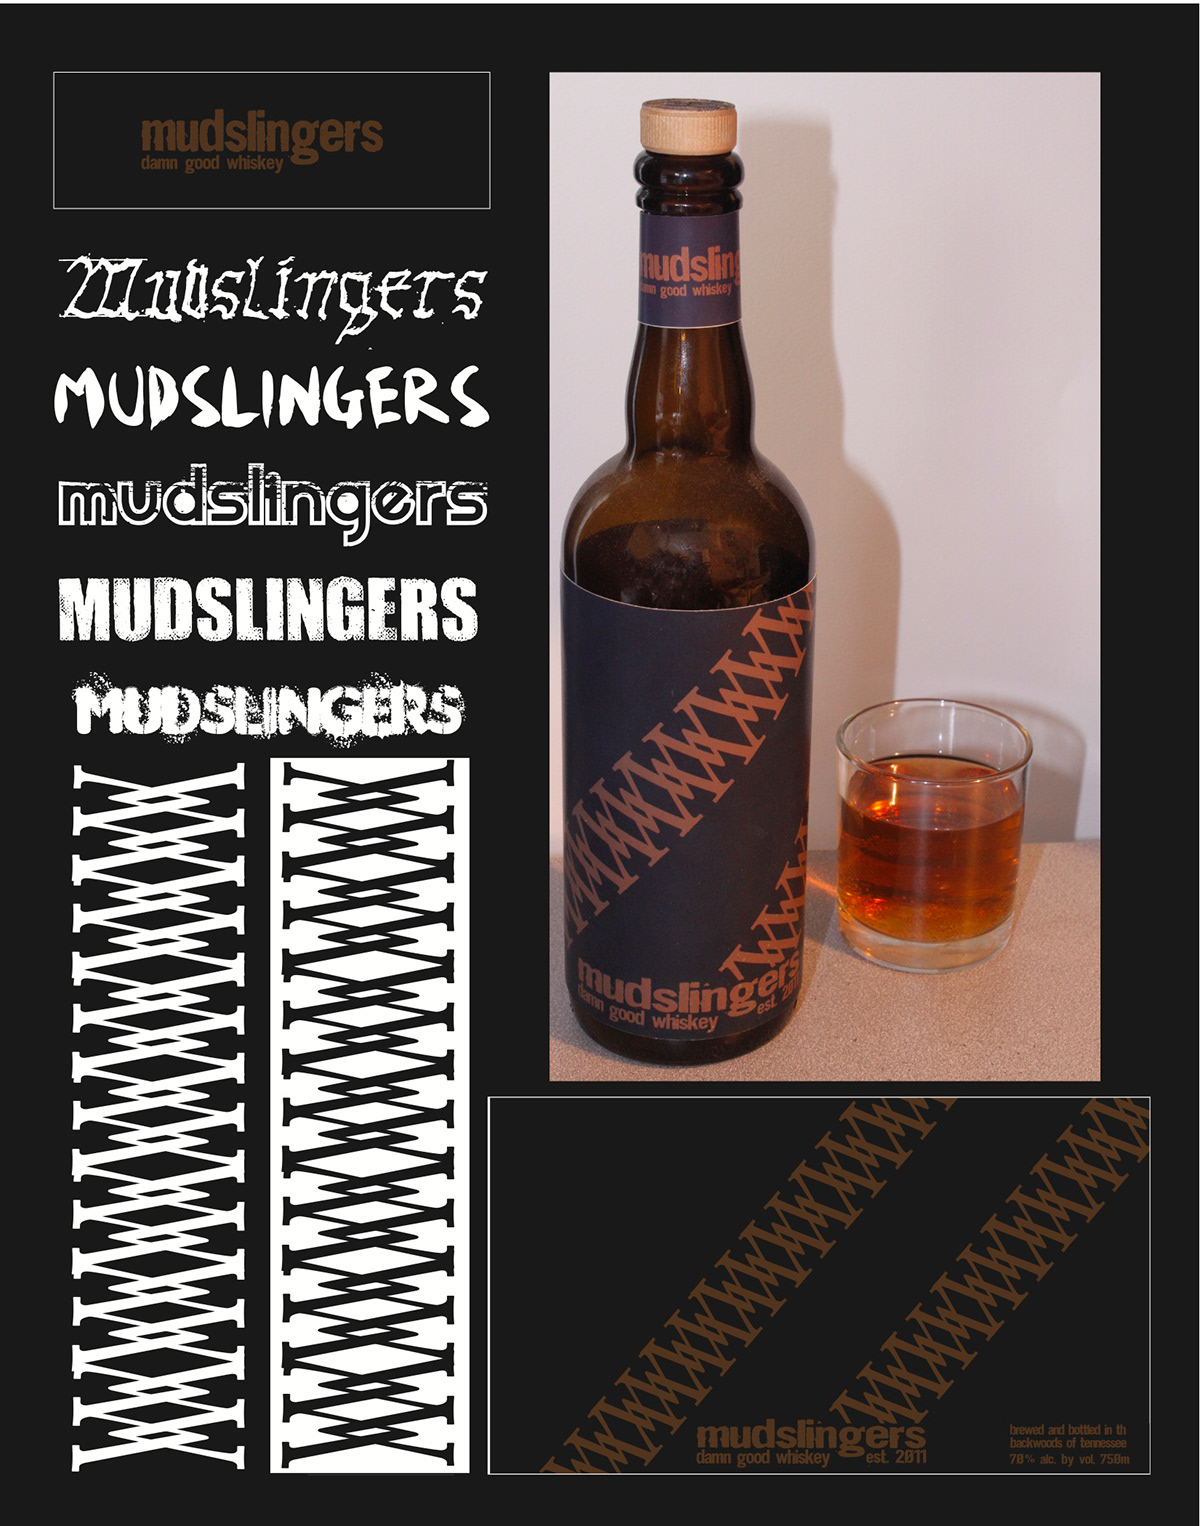 Mudslingers  mud  whiskey  alcohol  booze  product drink  party  liquor   trucks  DRINK  good  damn  2011